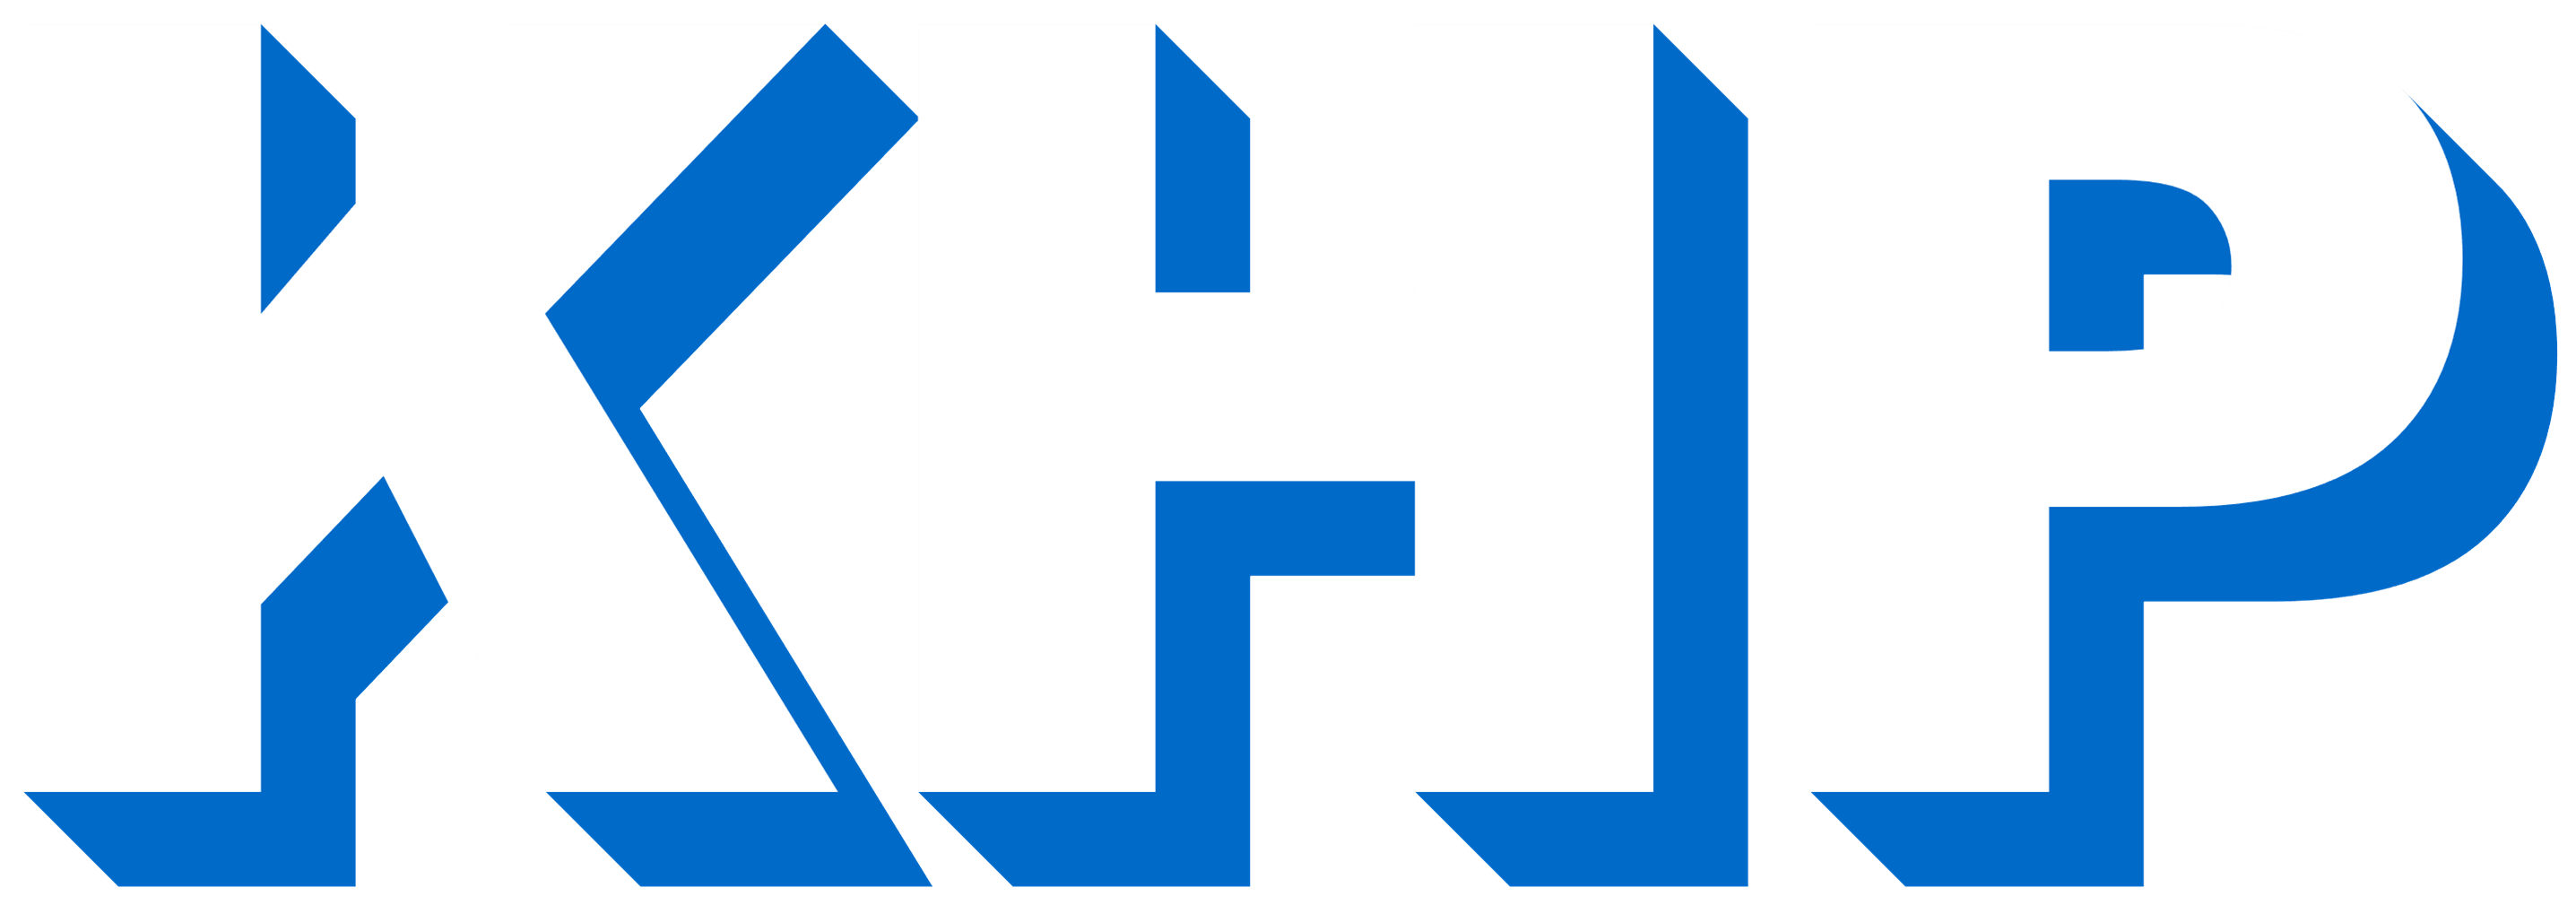 KHP Logo Hellblau